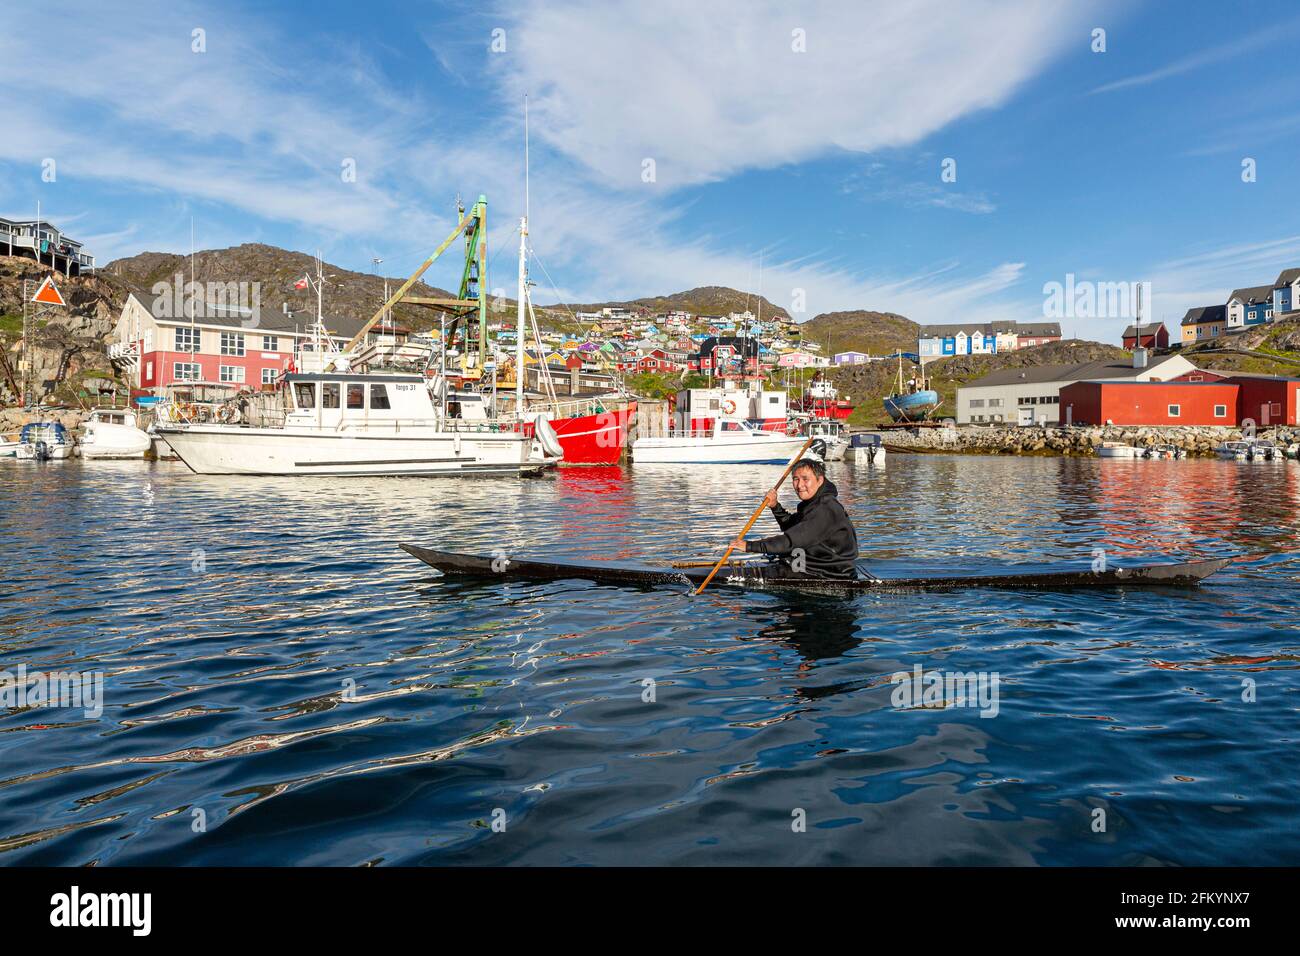 Local paddler demonstrates kayak techniques in the Greenlandic town of Qaqortoq, Greenland. Stock Photo